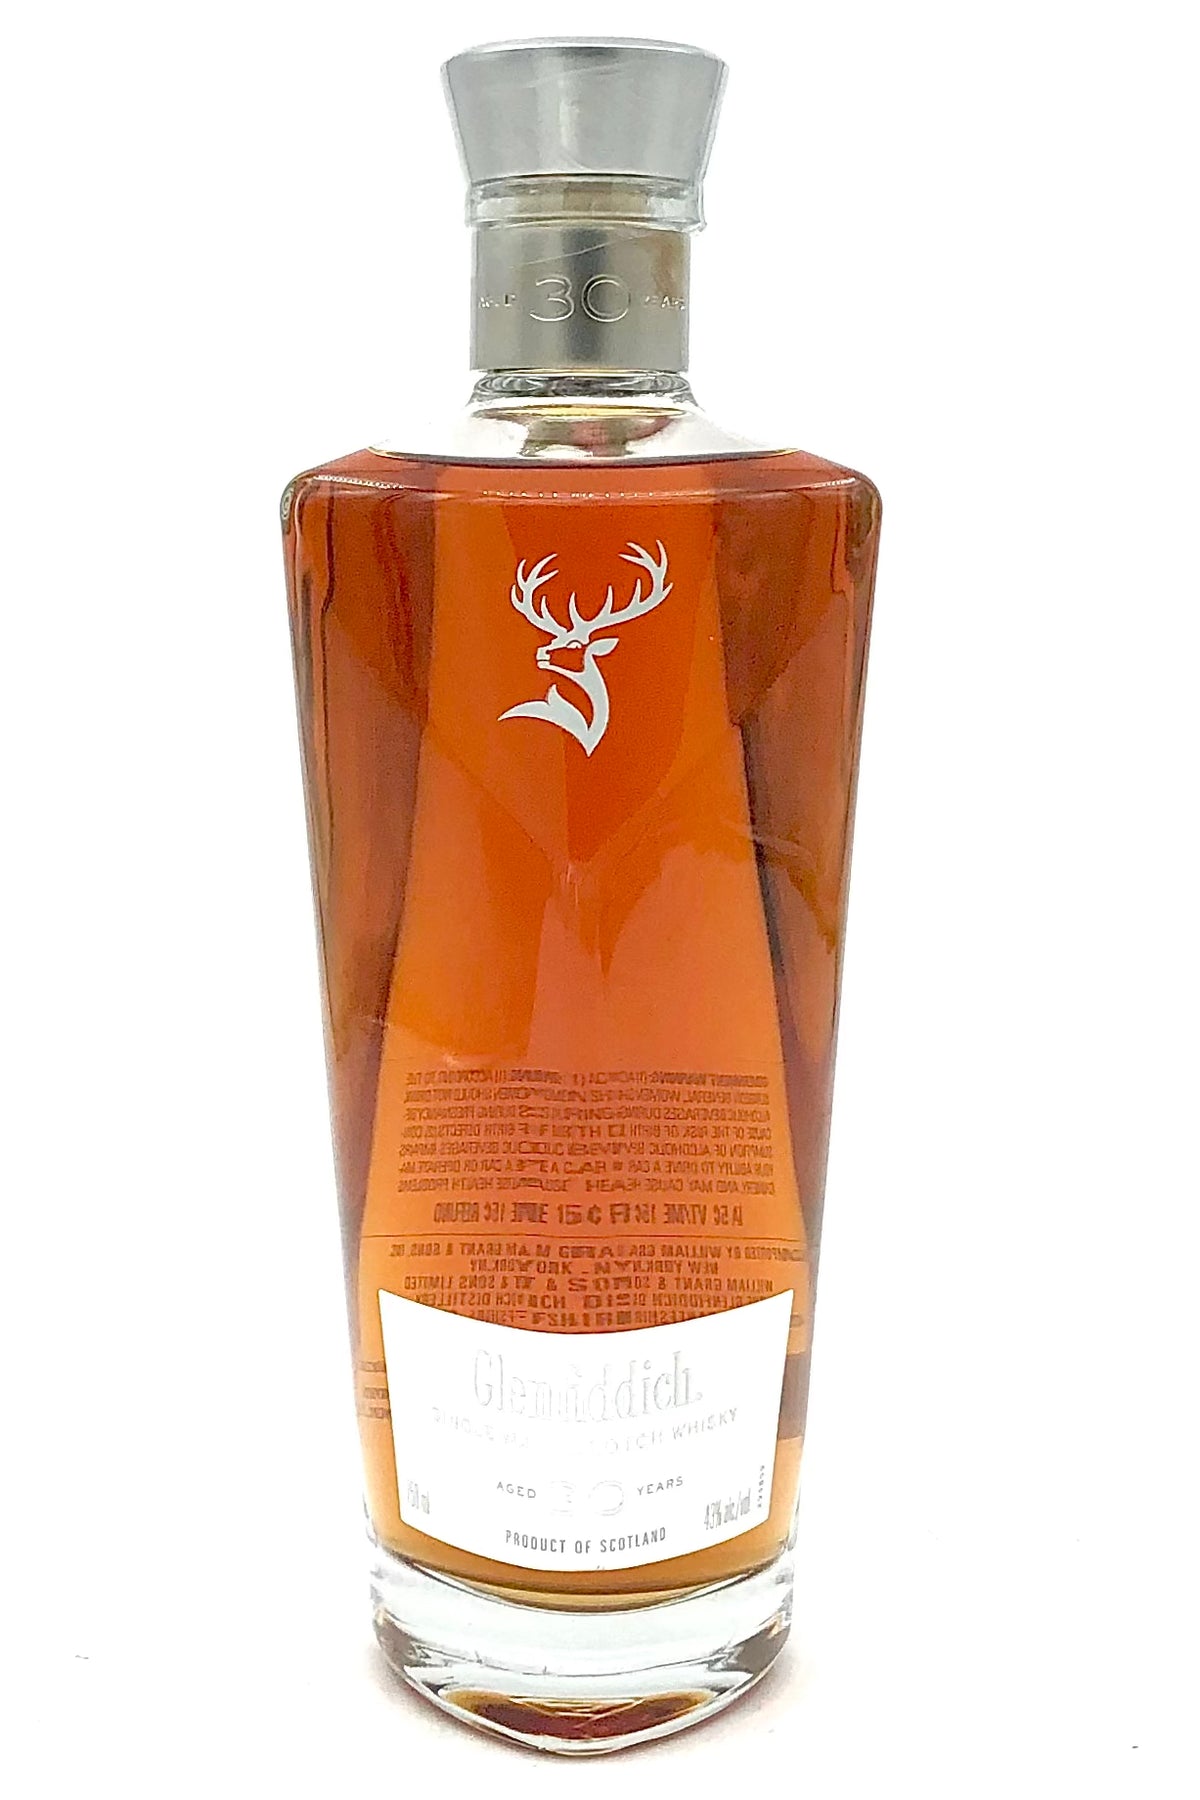 Glenfiddich 30 Year Old Single Malt Scotch Whisky